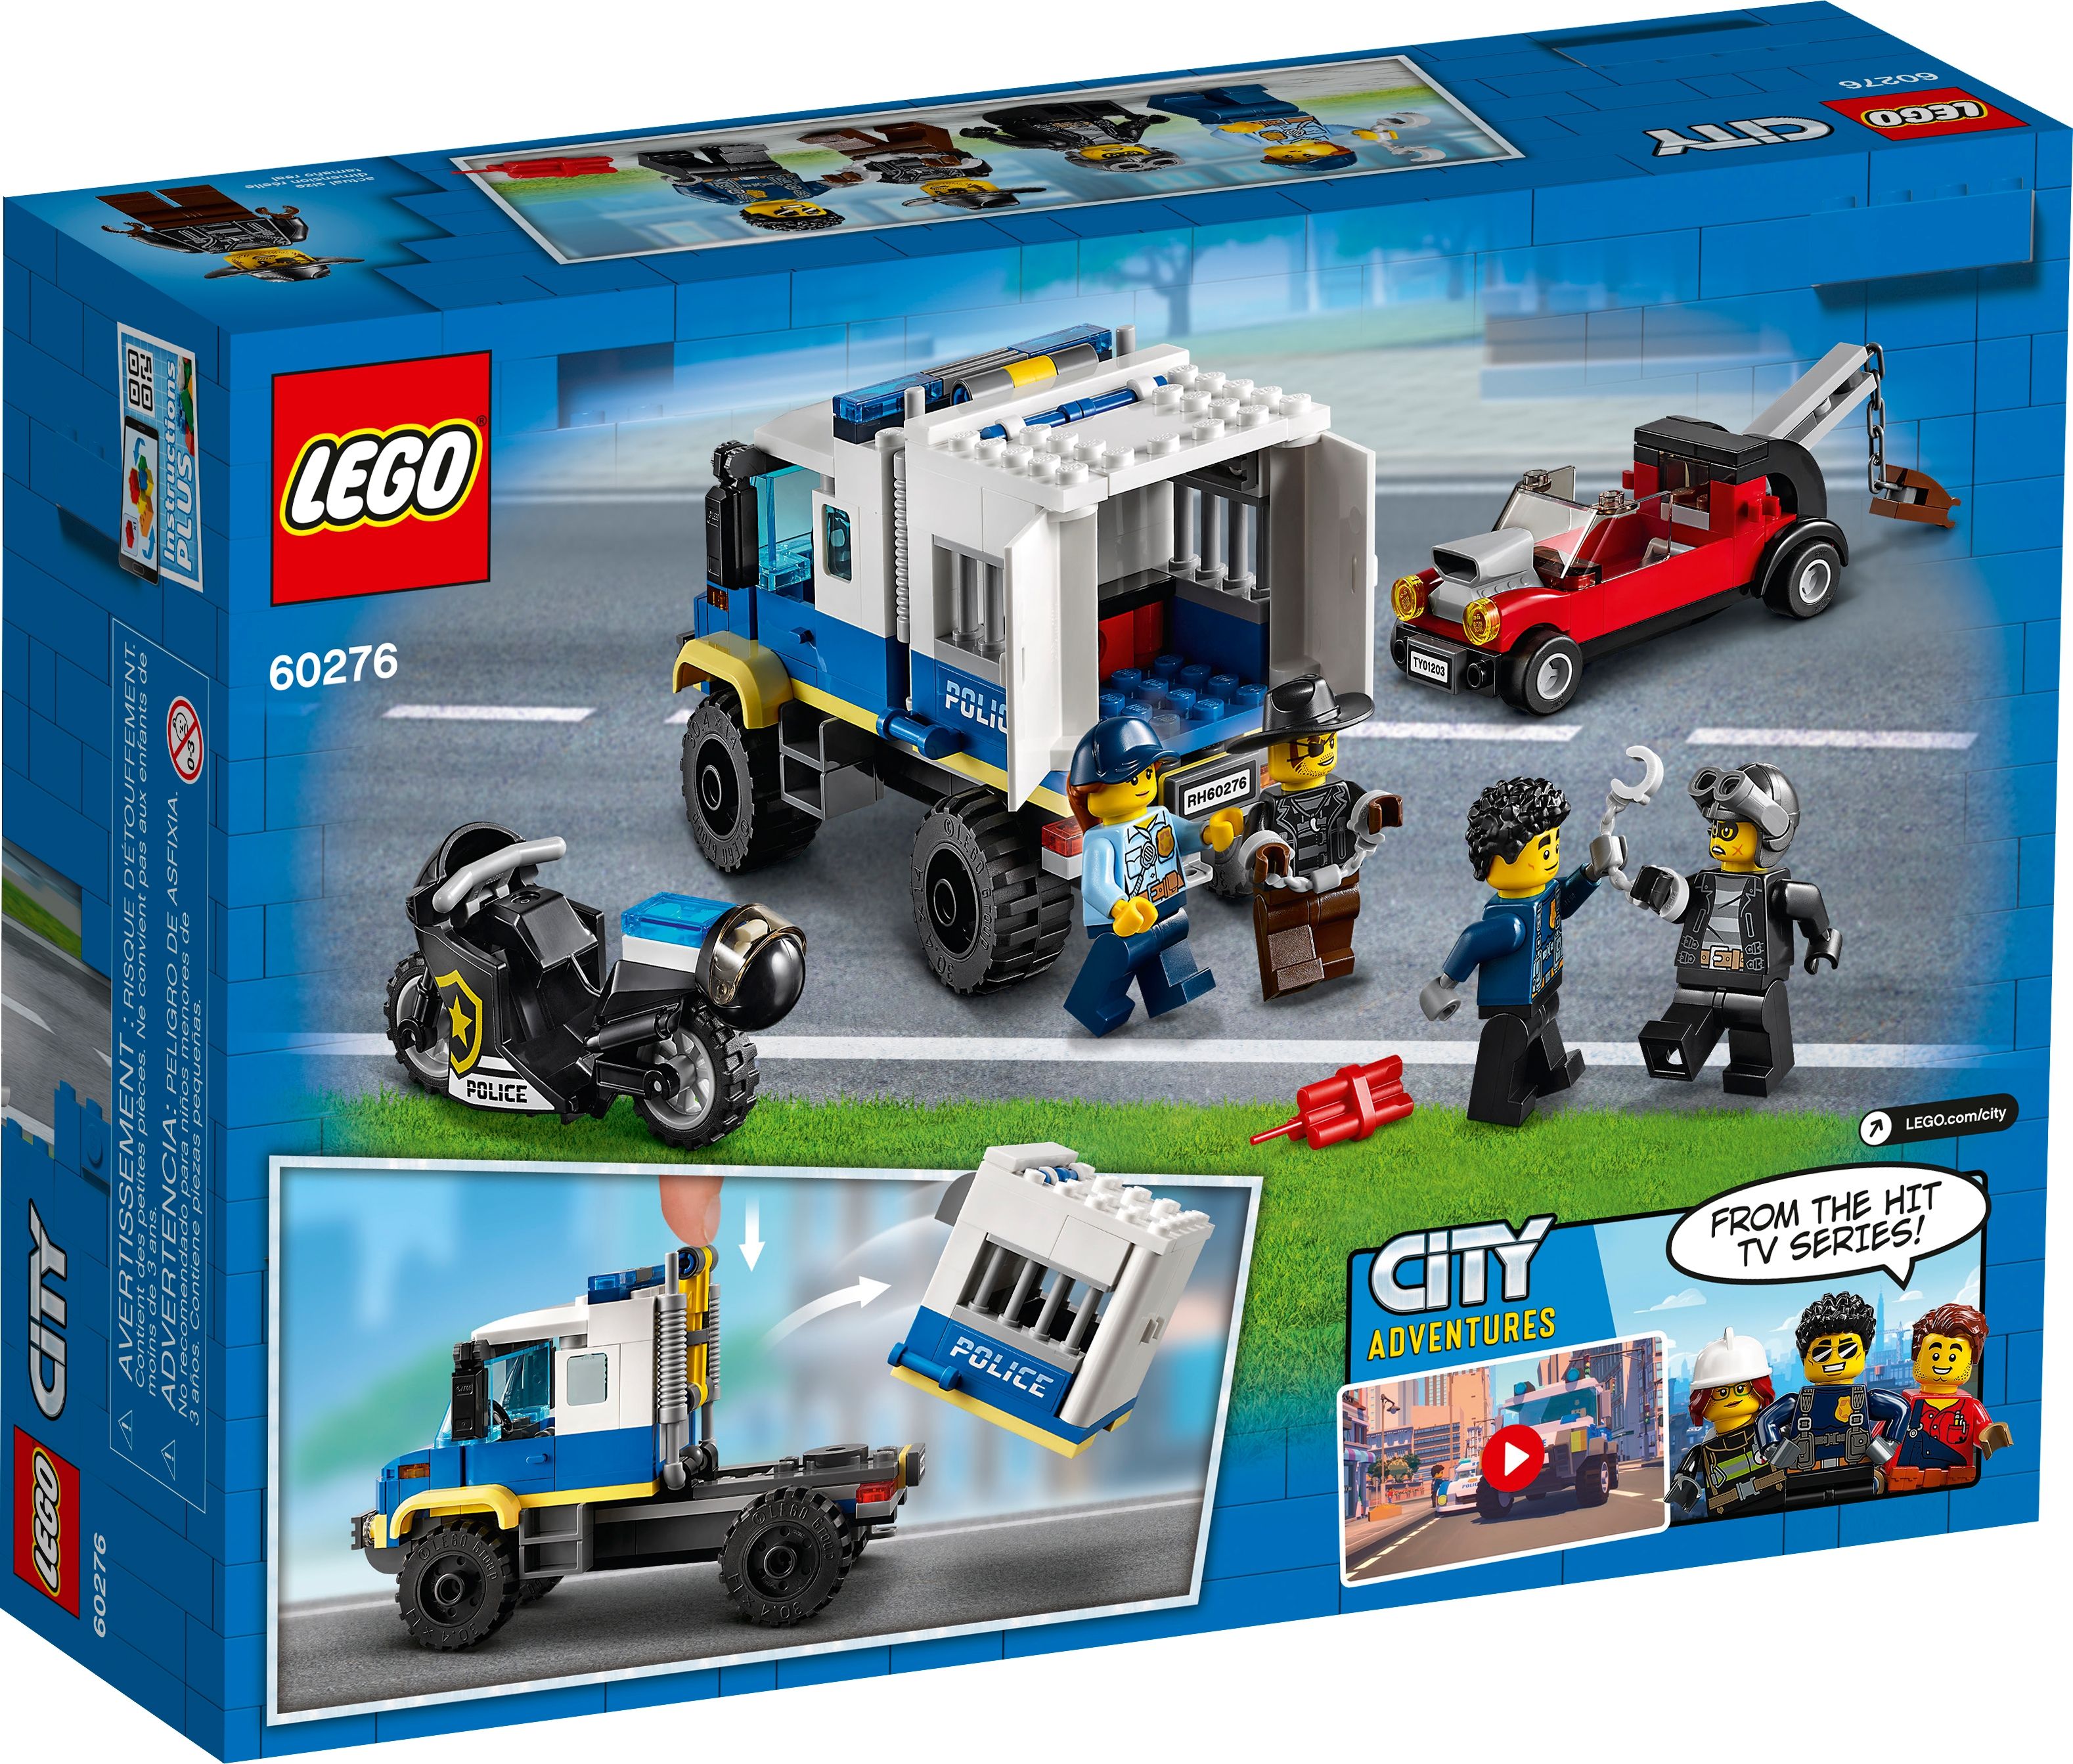 LEGO City 60276 Polizei Gefangenentransporter LEGO_60276_alt6.jpg